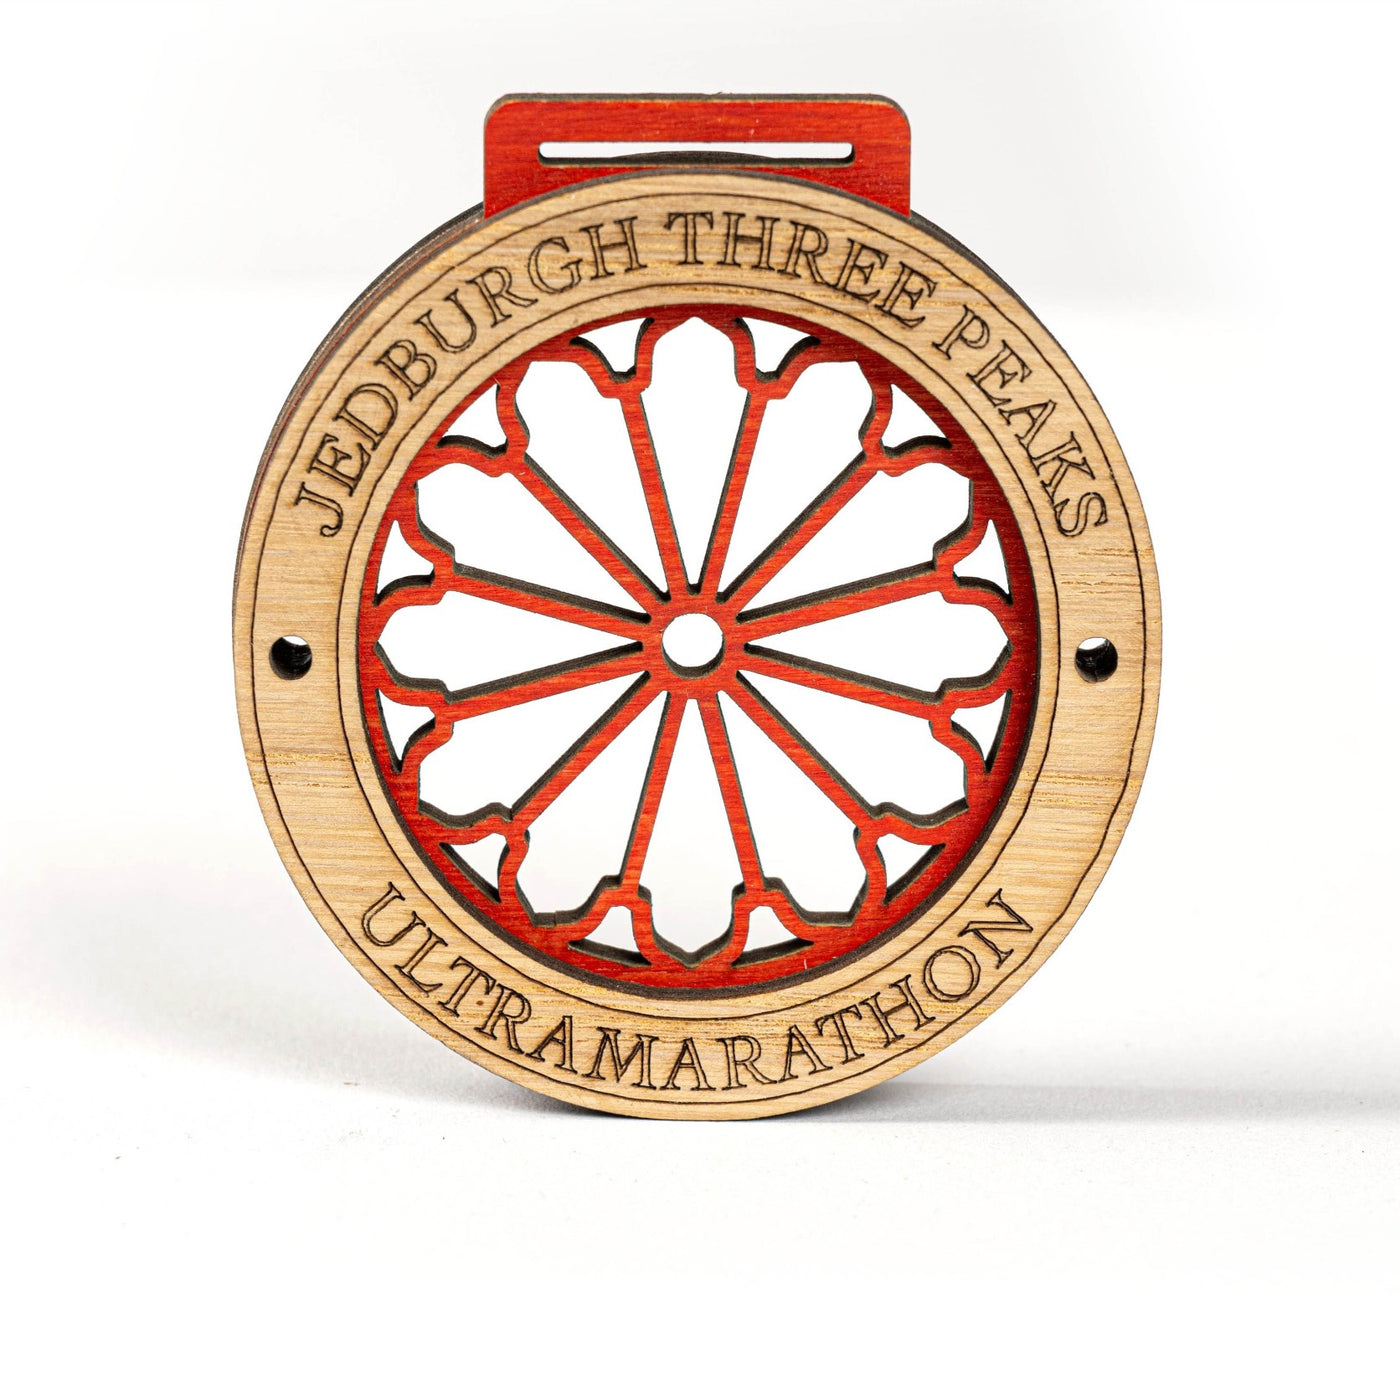 Jedburgh Ultra Marathon Medal